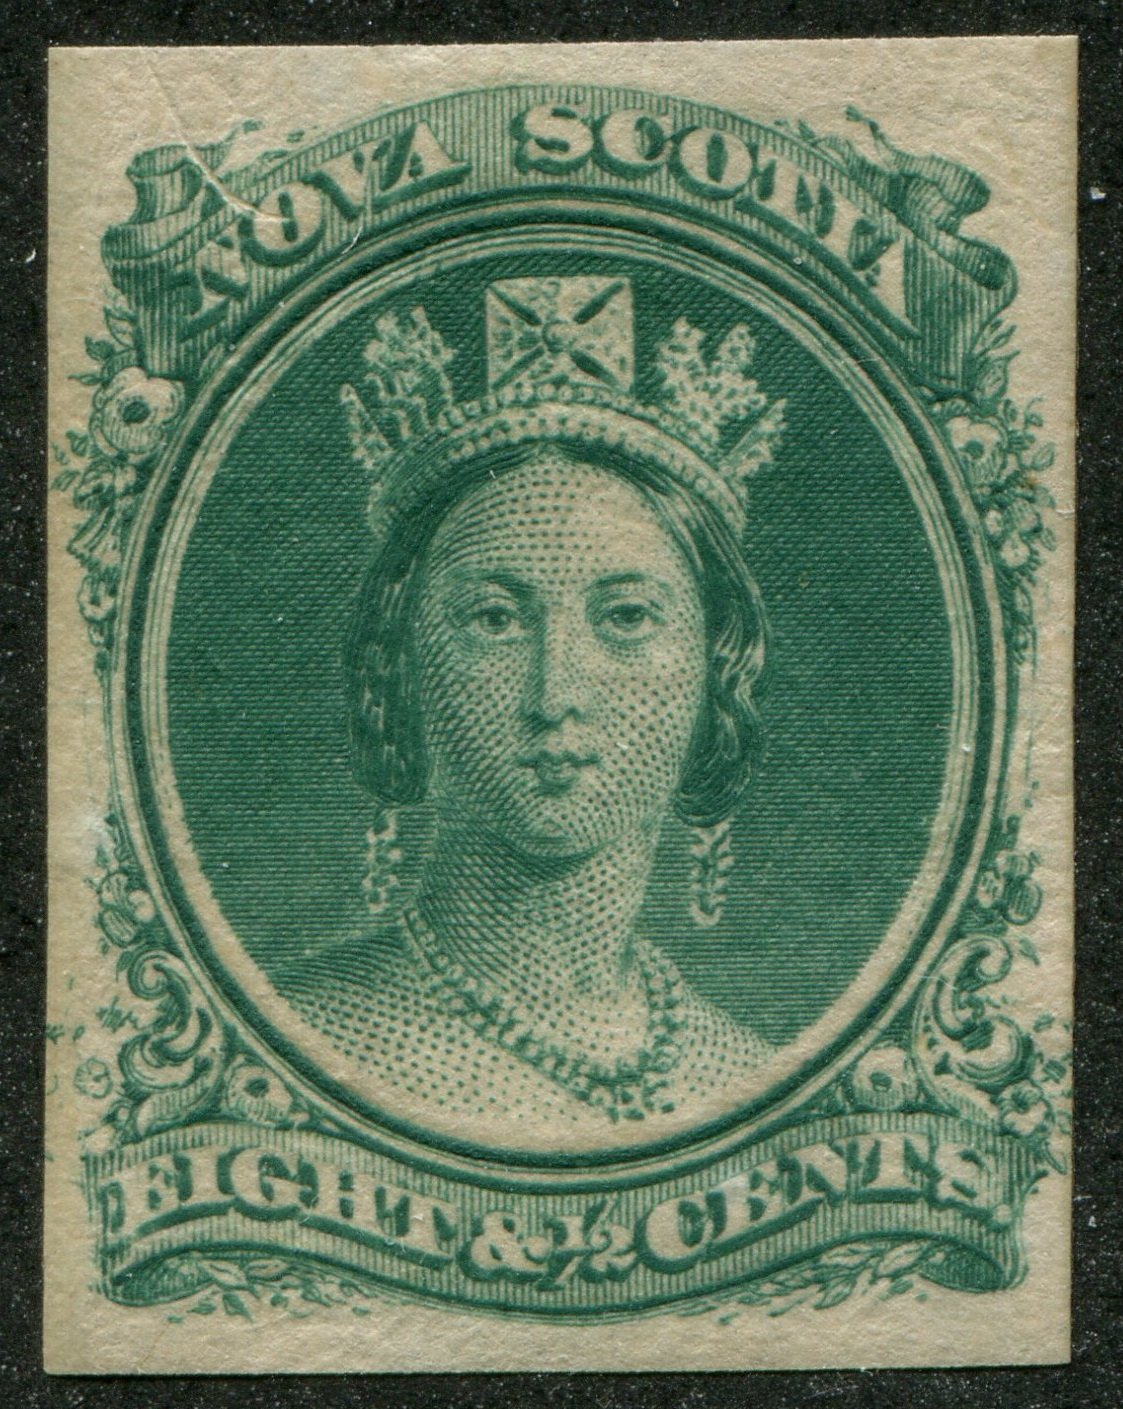 0011NS1708 - Nova Scotia #11ii - Proof - Deveney Stamps Ltd. Canadian Stamps